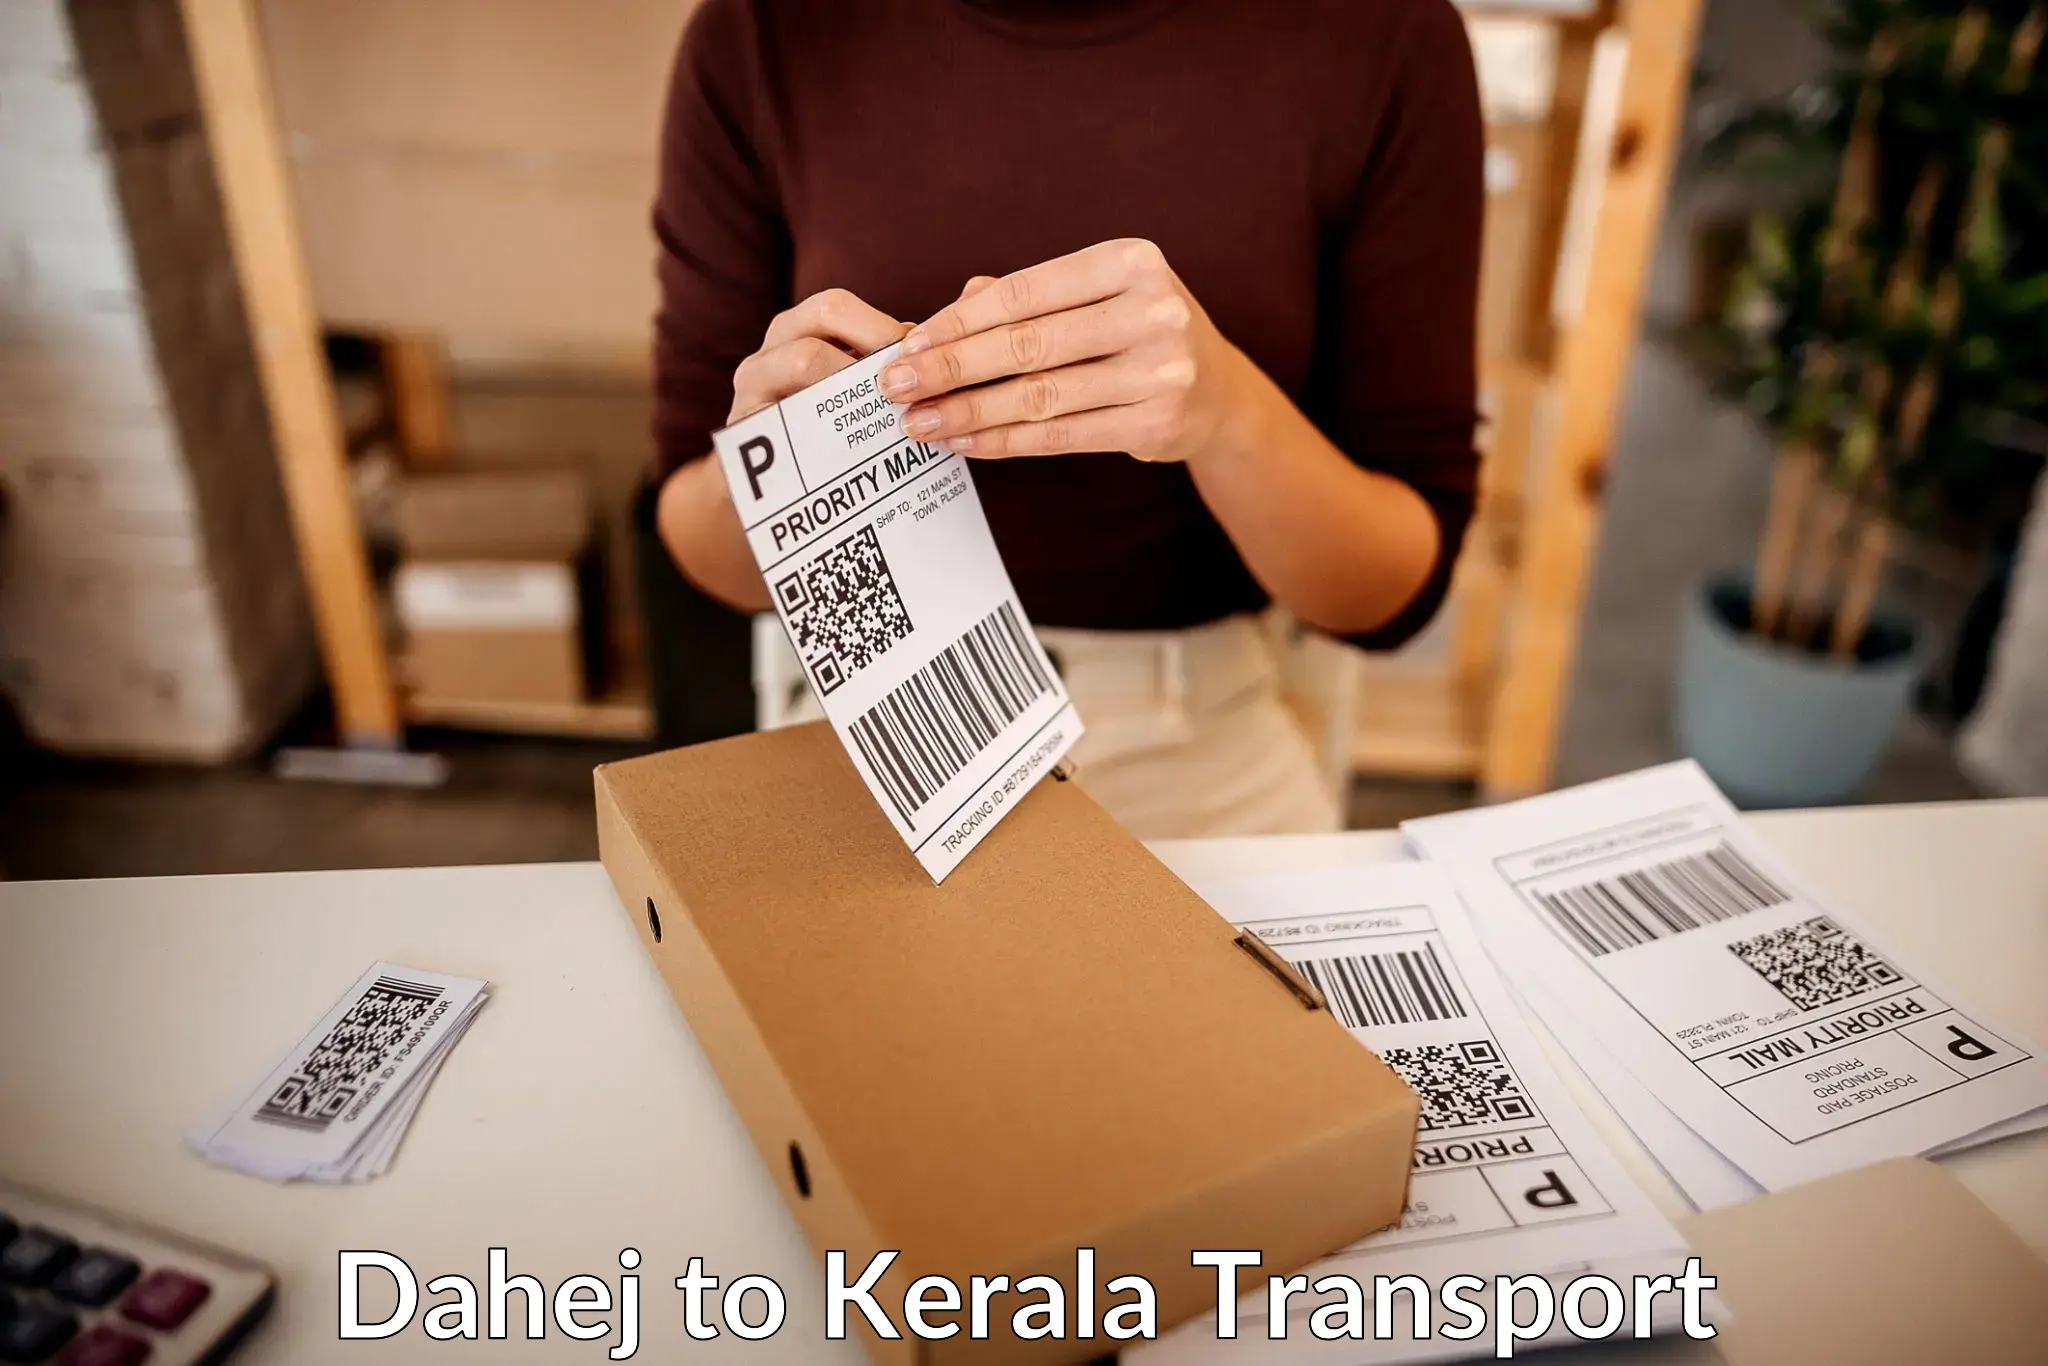 Shipping partner Dahej to Kerala